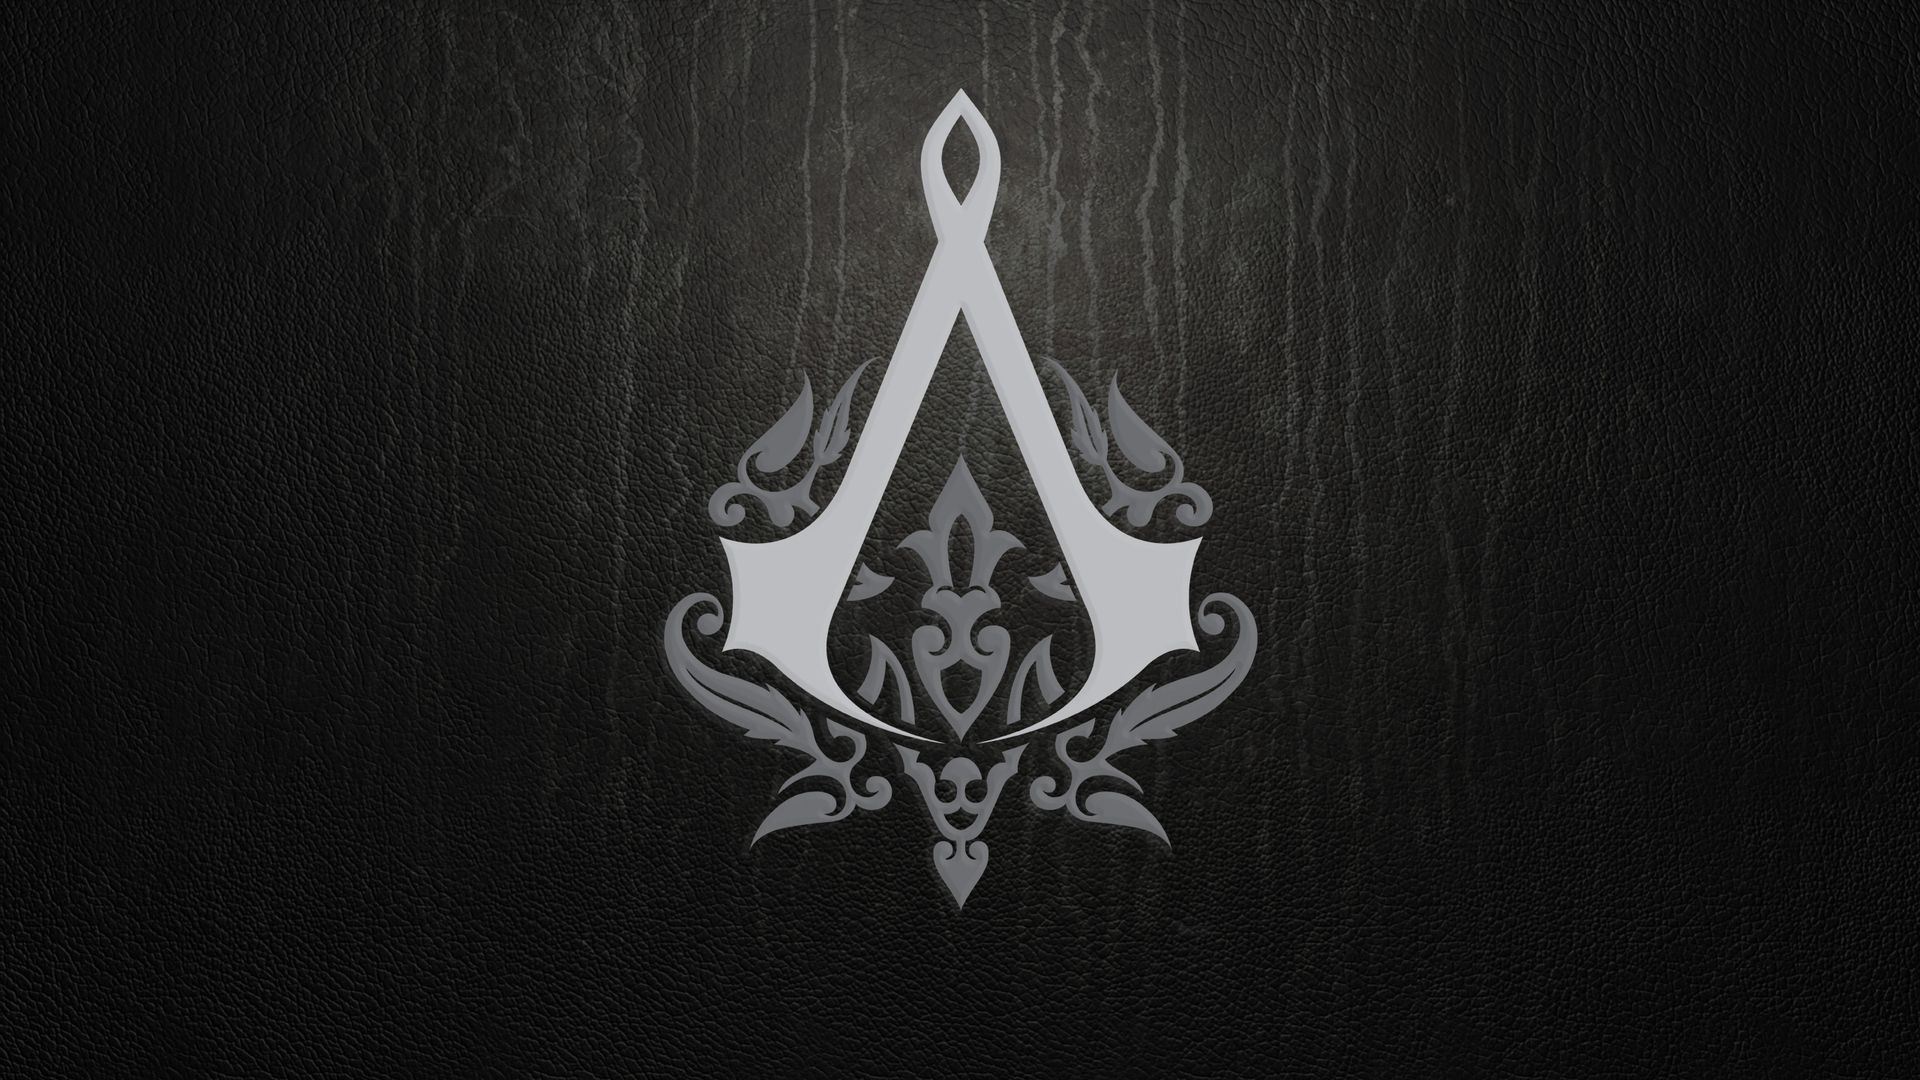 Assassins Creed Logo Wallpaper Photo. Assassins creed logo